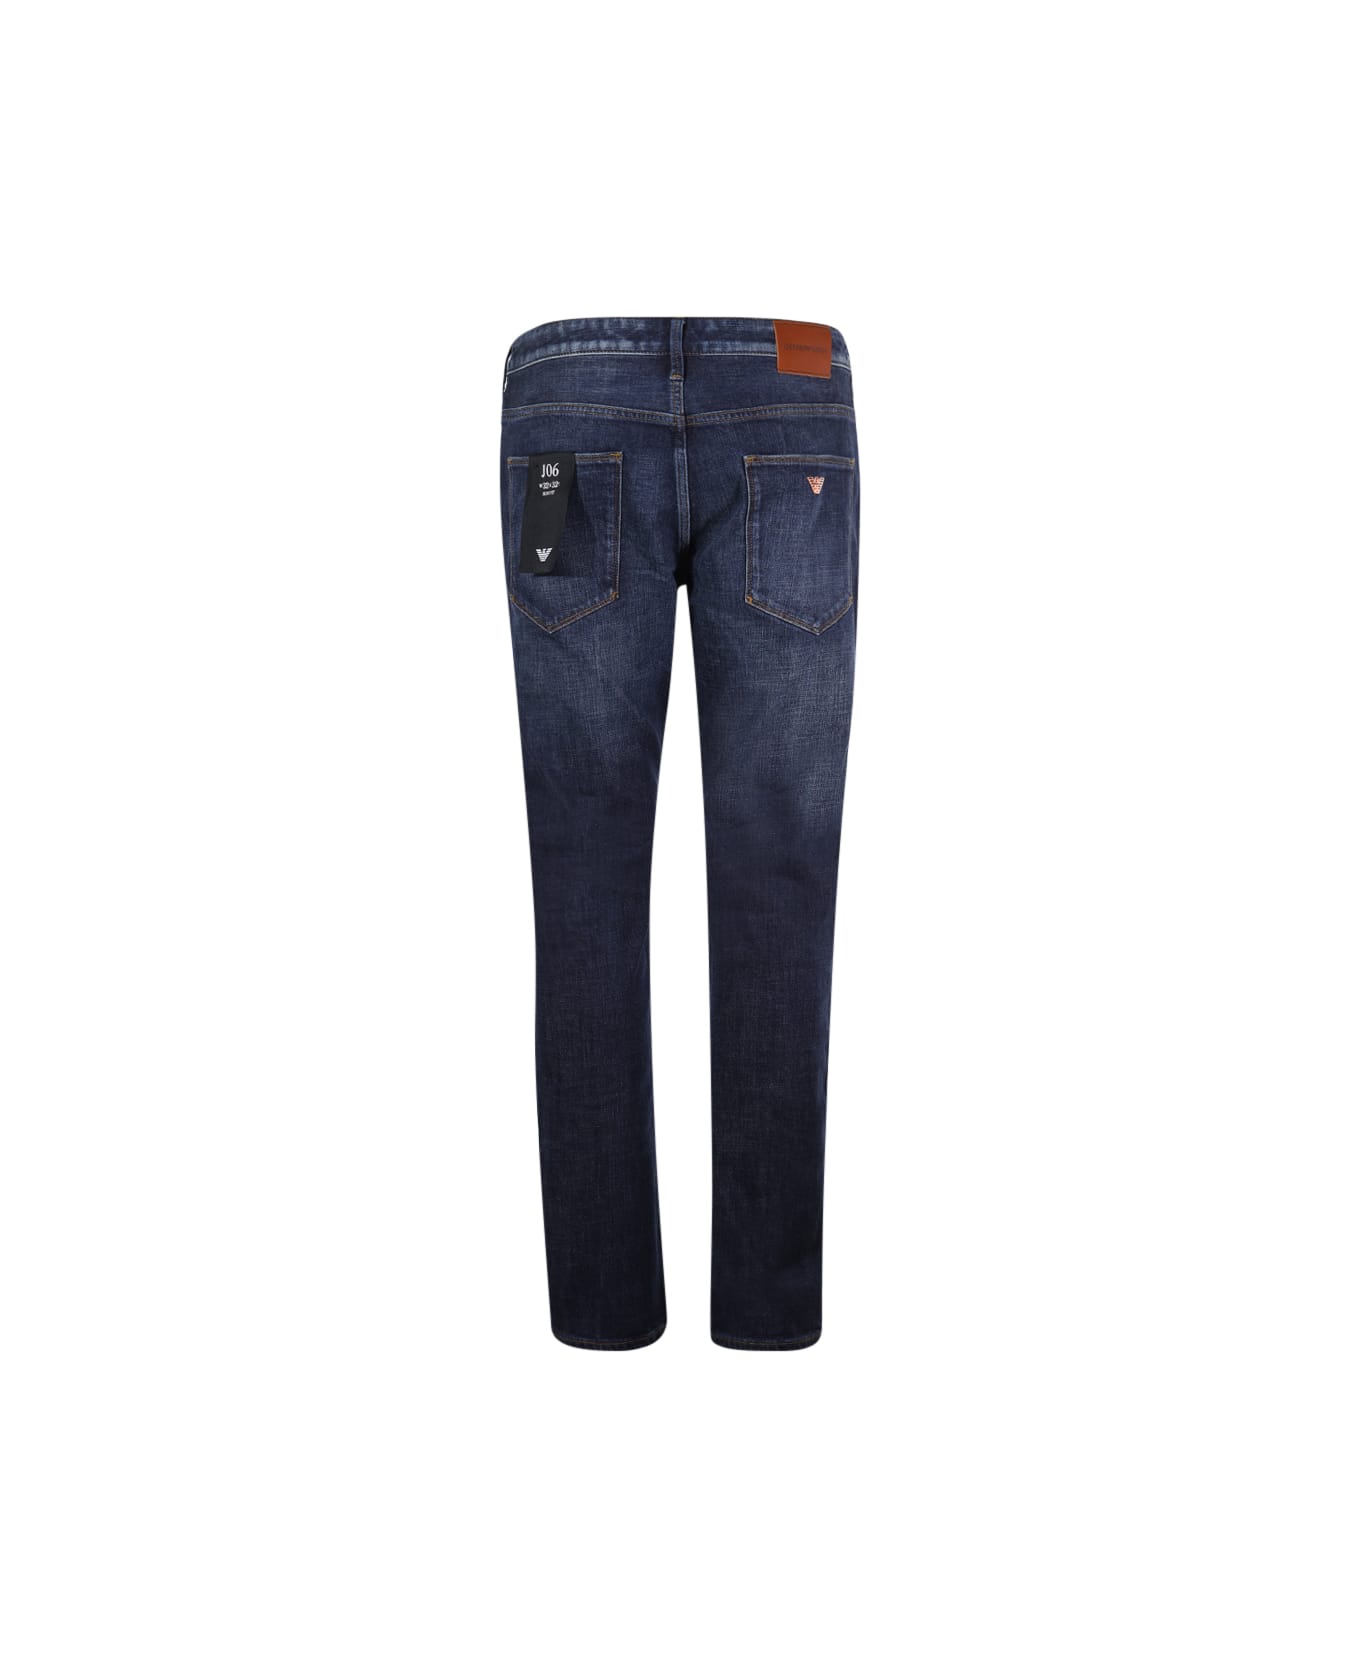 Emporio Armani 'j06' Slim Fit Jeans - Denim